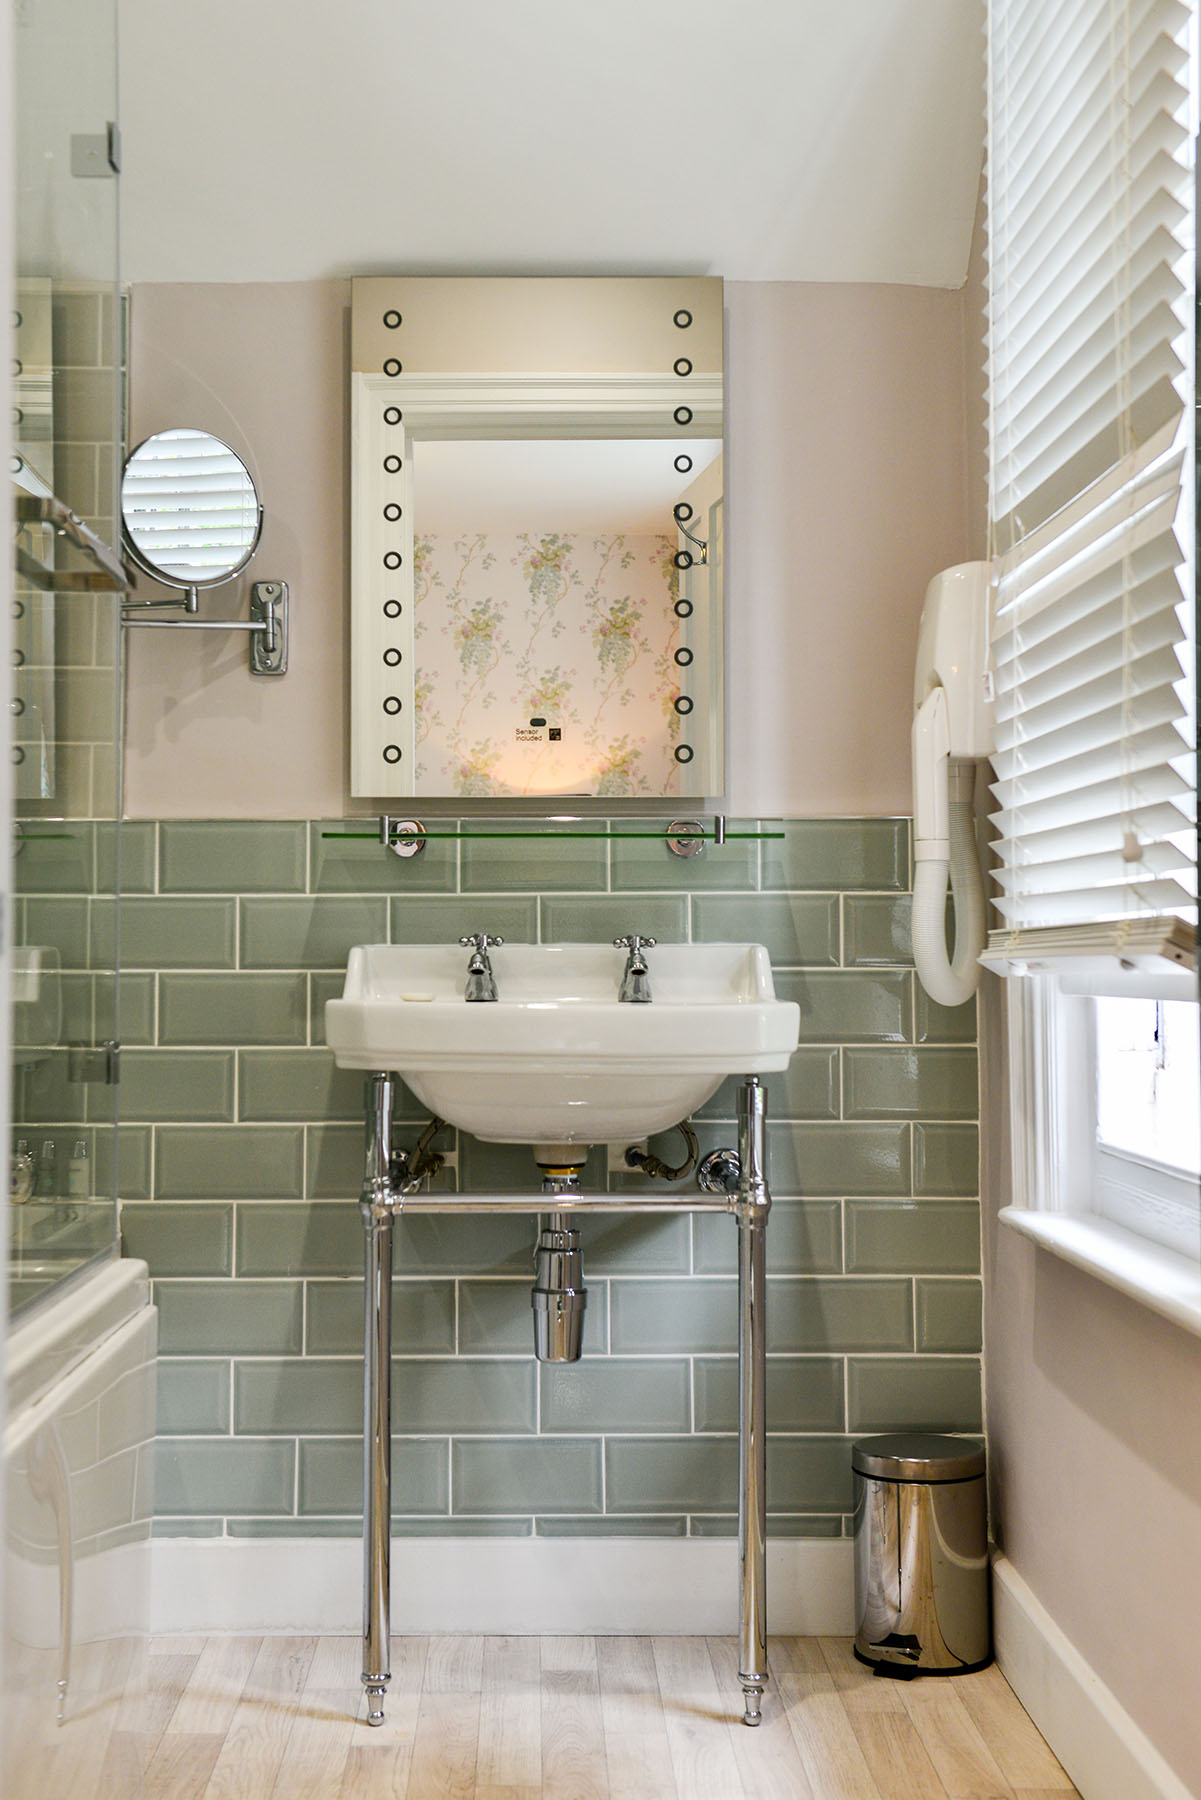 Springwells-bathroom green tiles